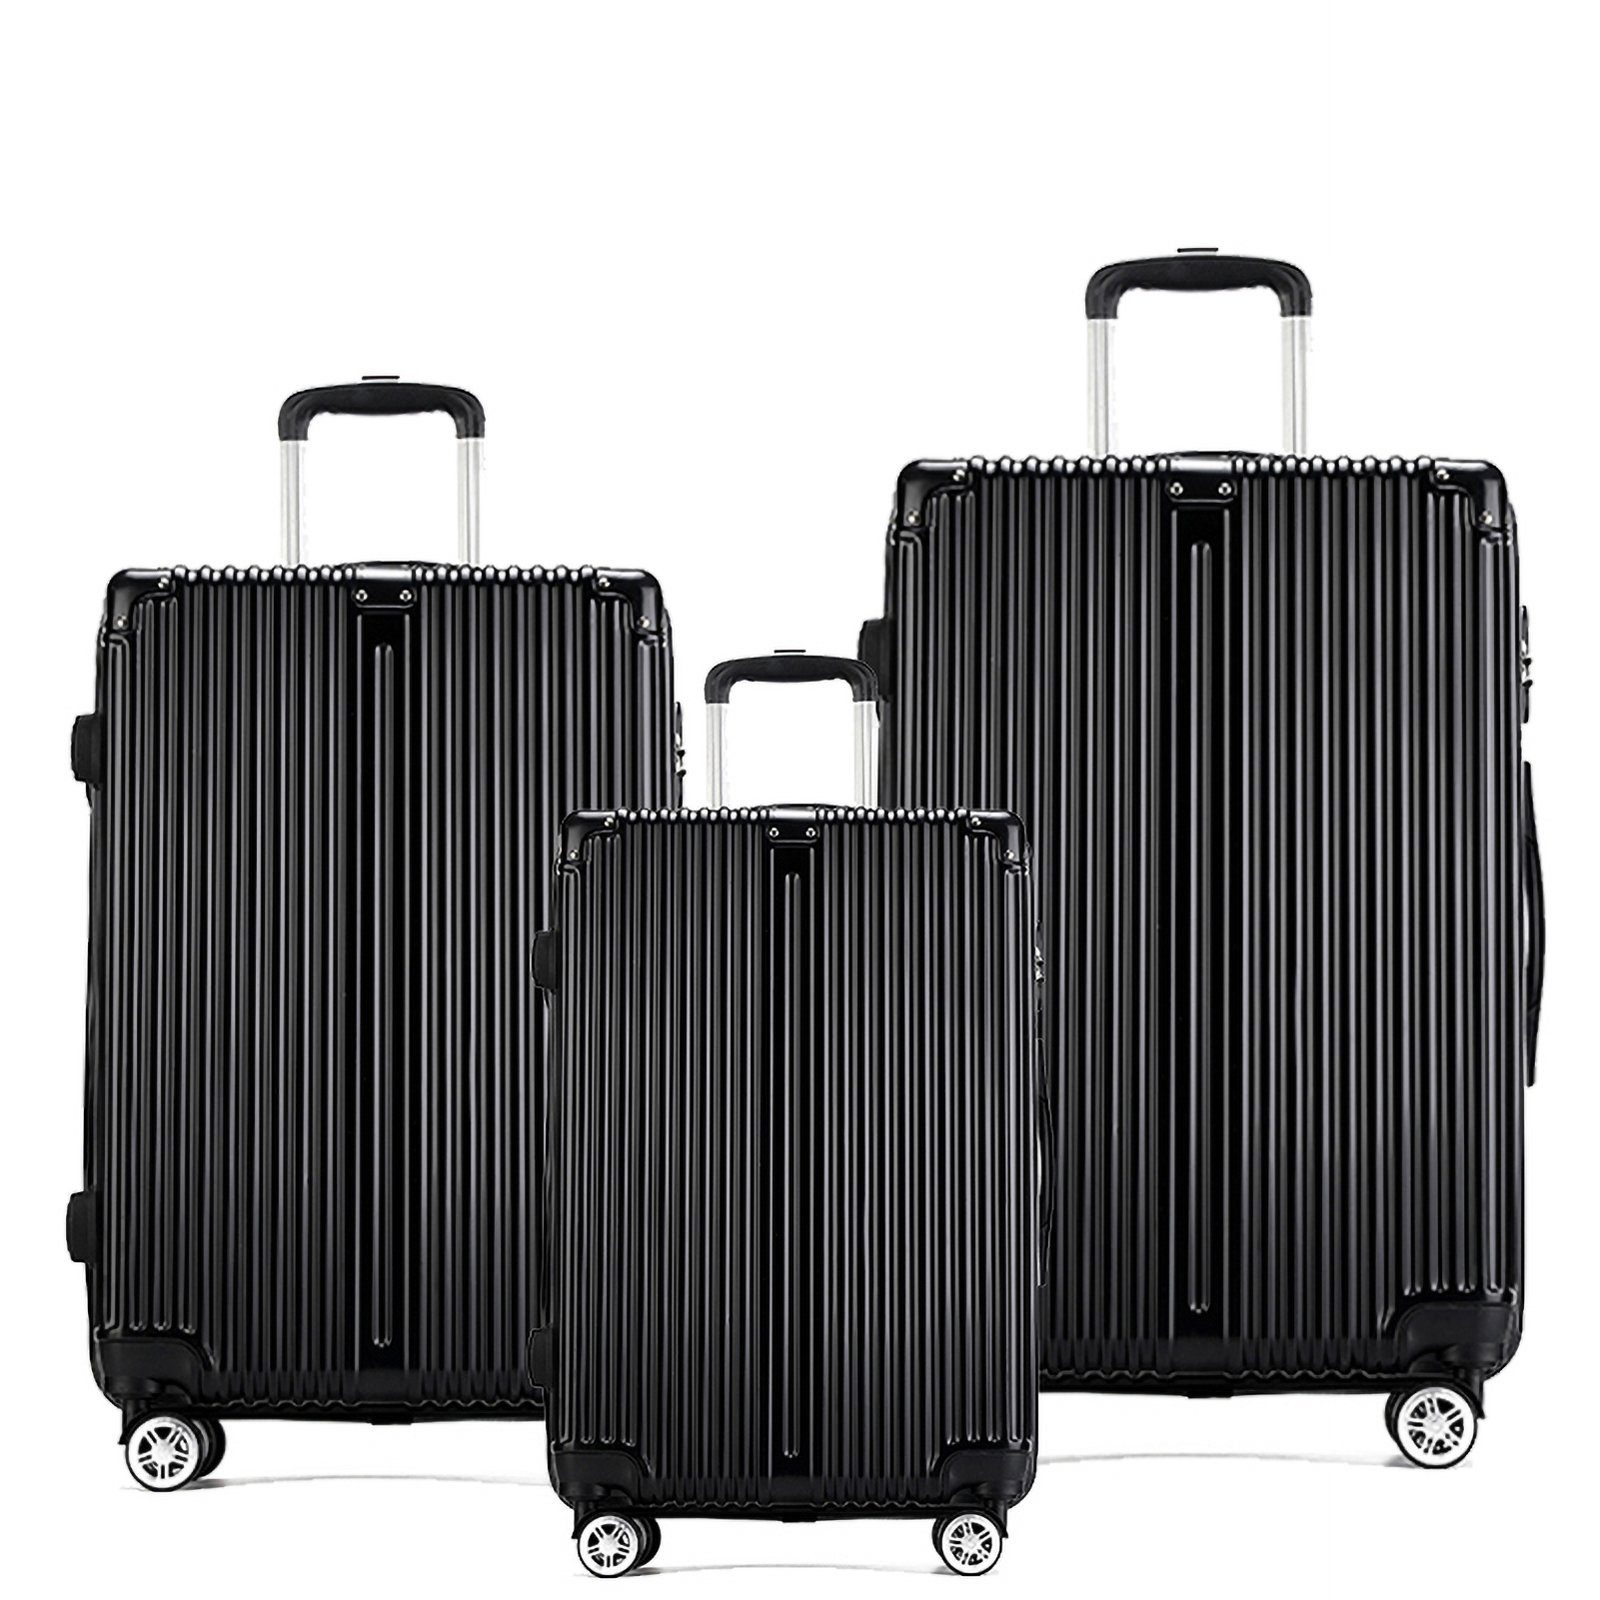 stil ABS-Material, FUROKOY Kofferset Hartschalen-Handgepäck mit Zahlenschloss Reisekoffer 2 Set, 3-teiliges , schwarz Rollkoffer,